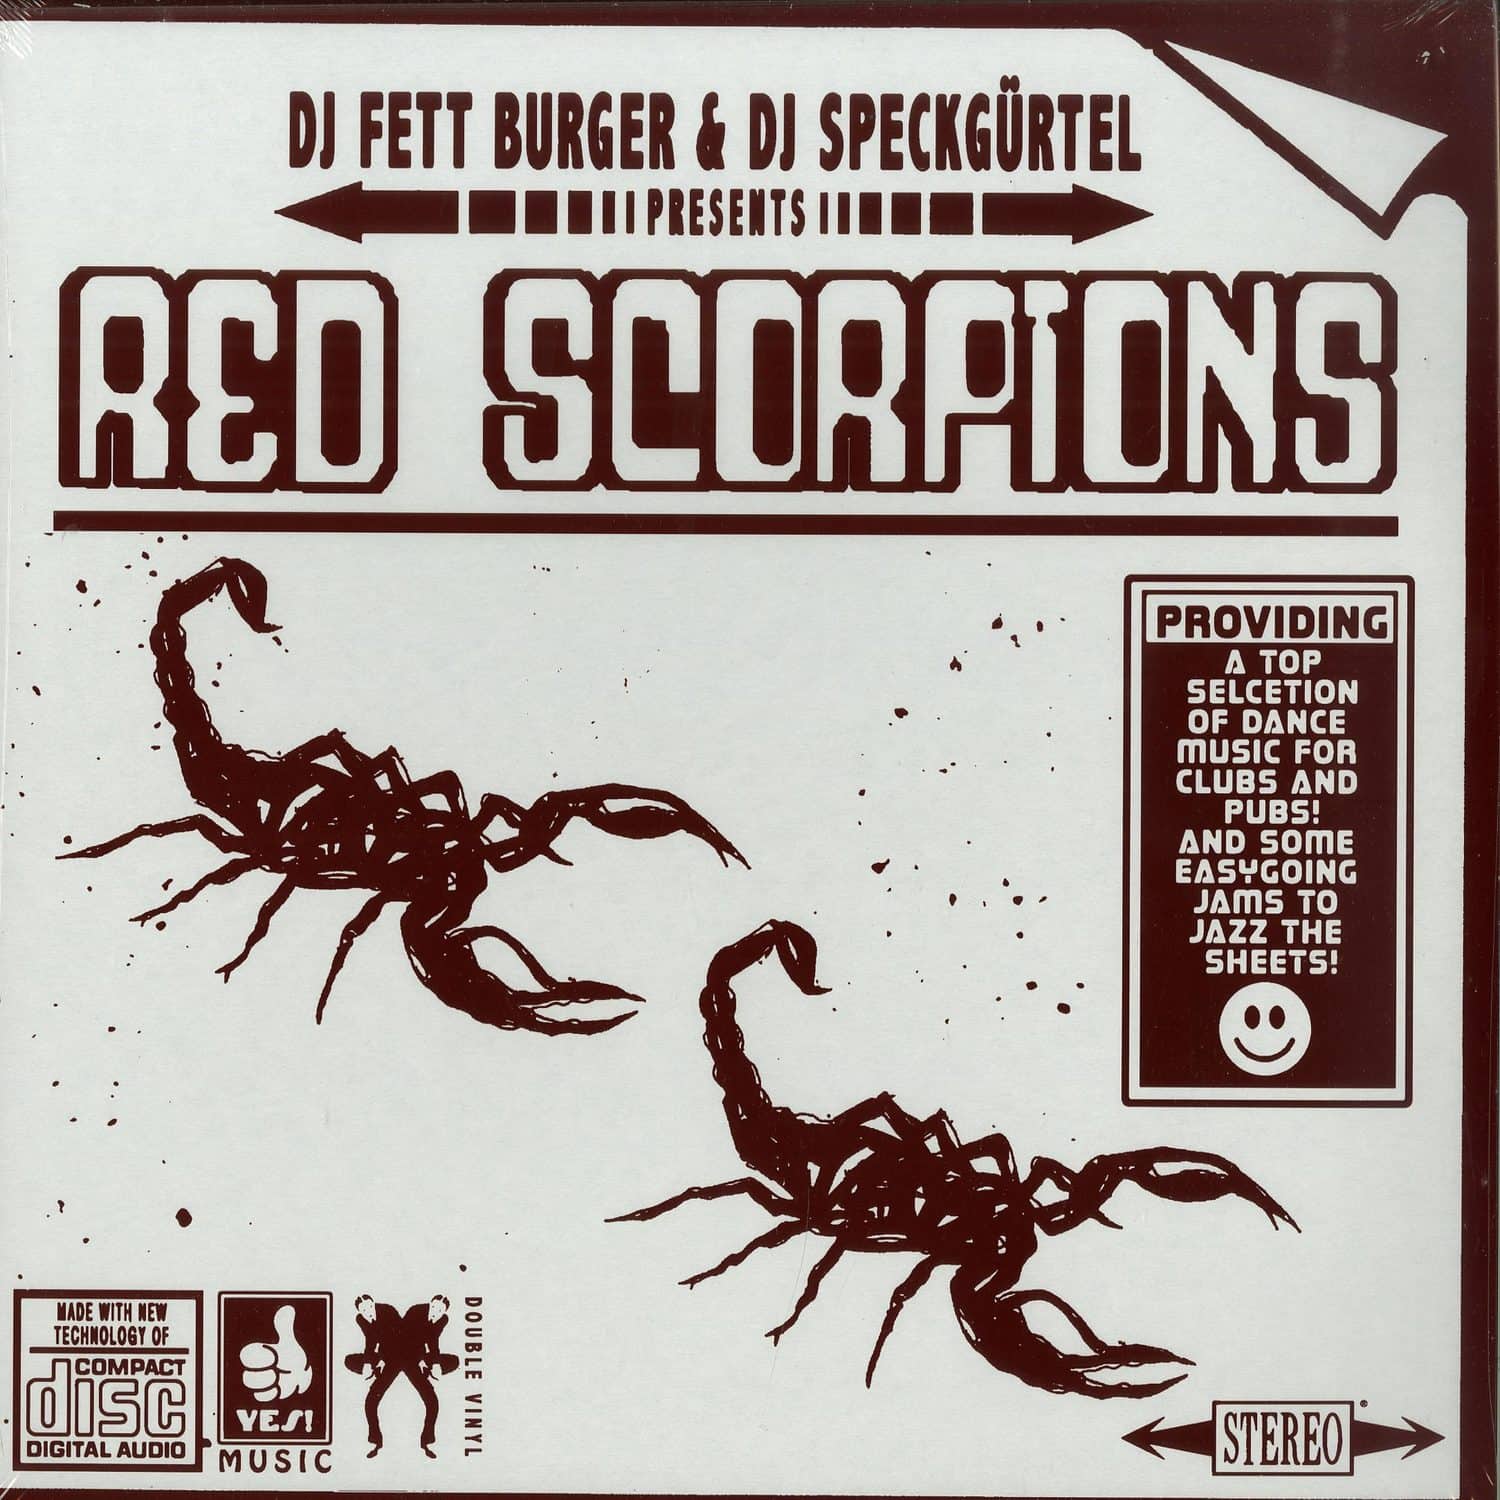 DJ Fett Burger & DJ Speckguertel - RED SCORPIONS 